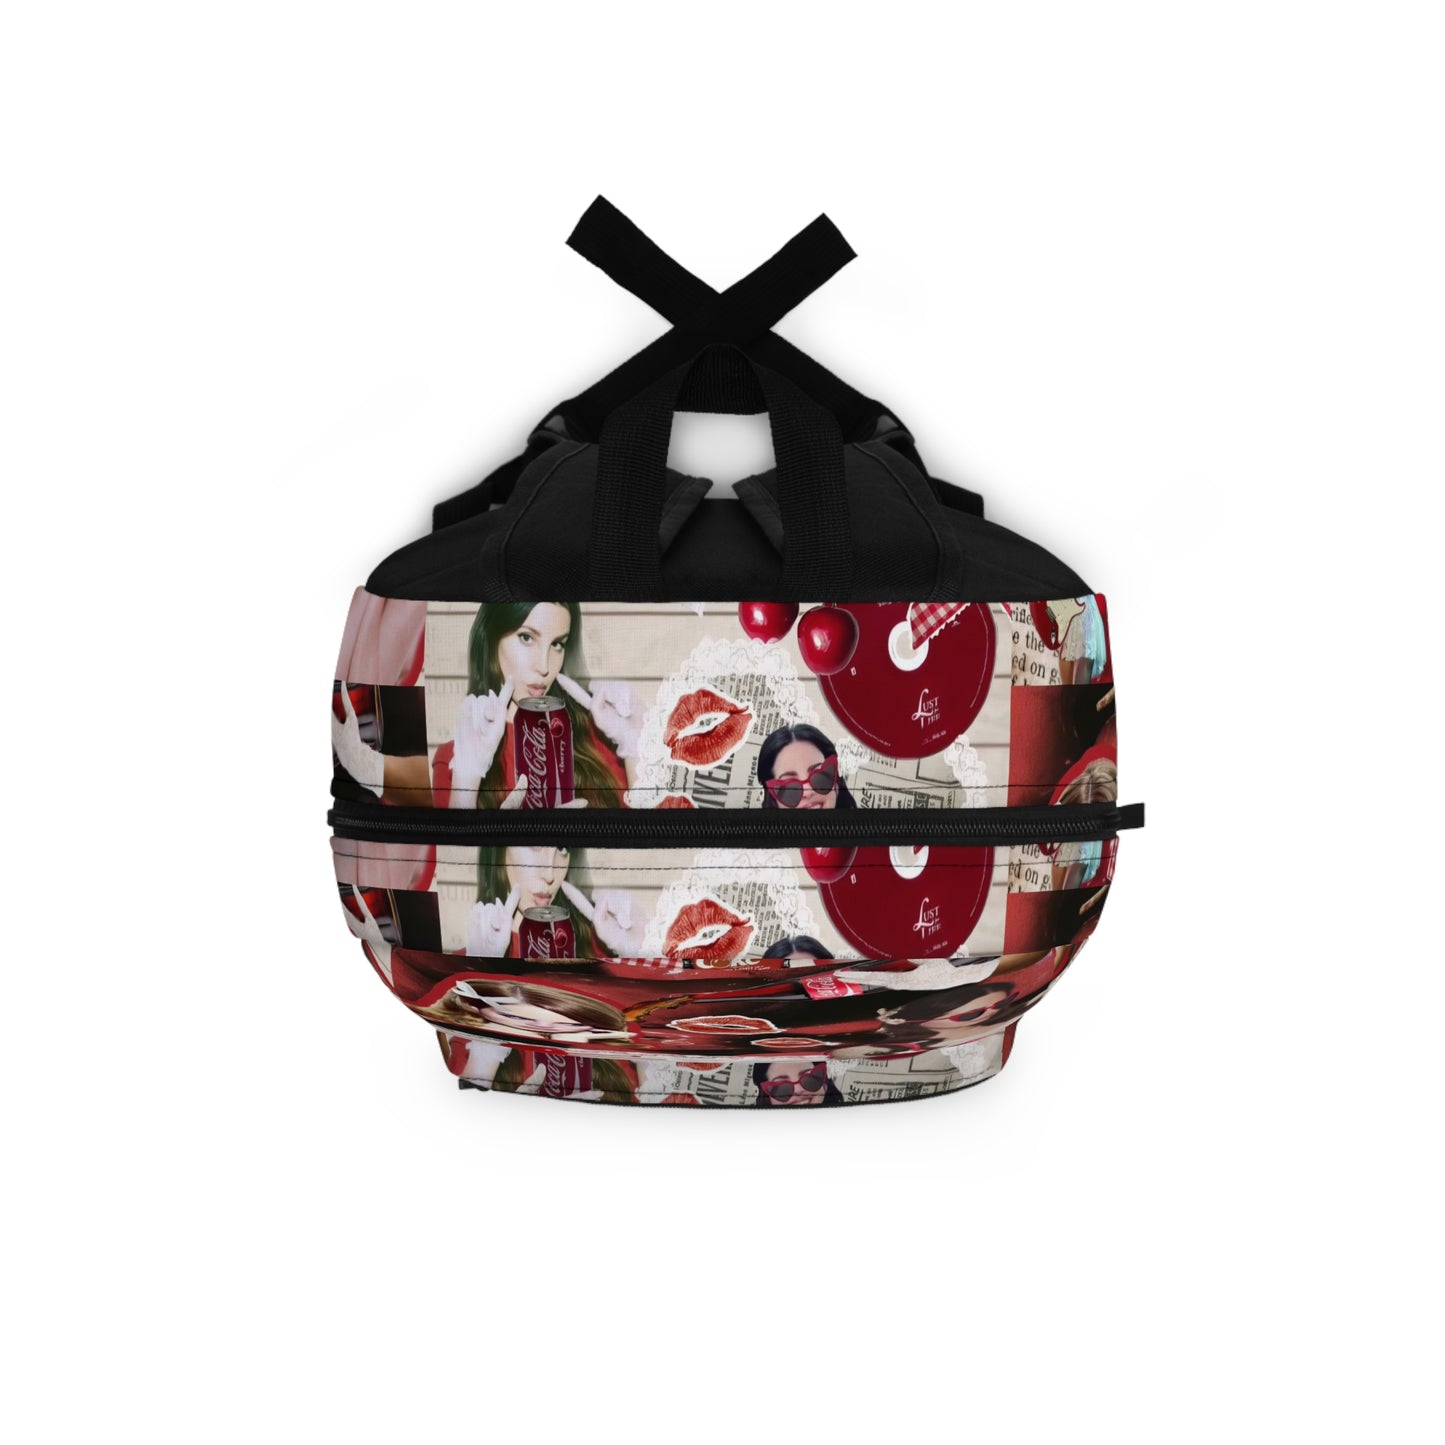 Lana Del Rey Cherry Coke Collage Backpack